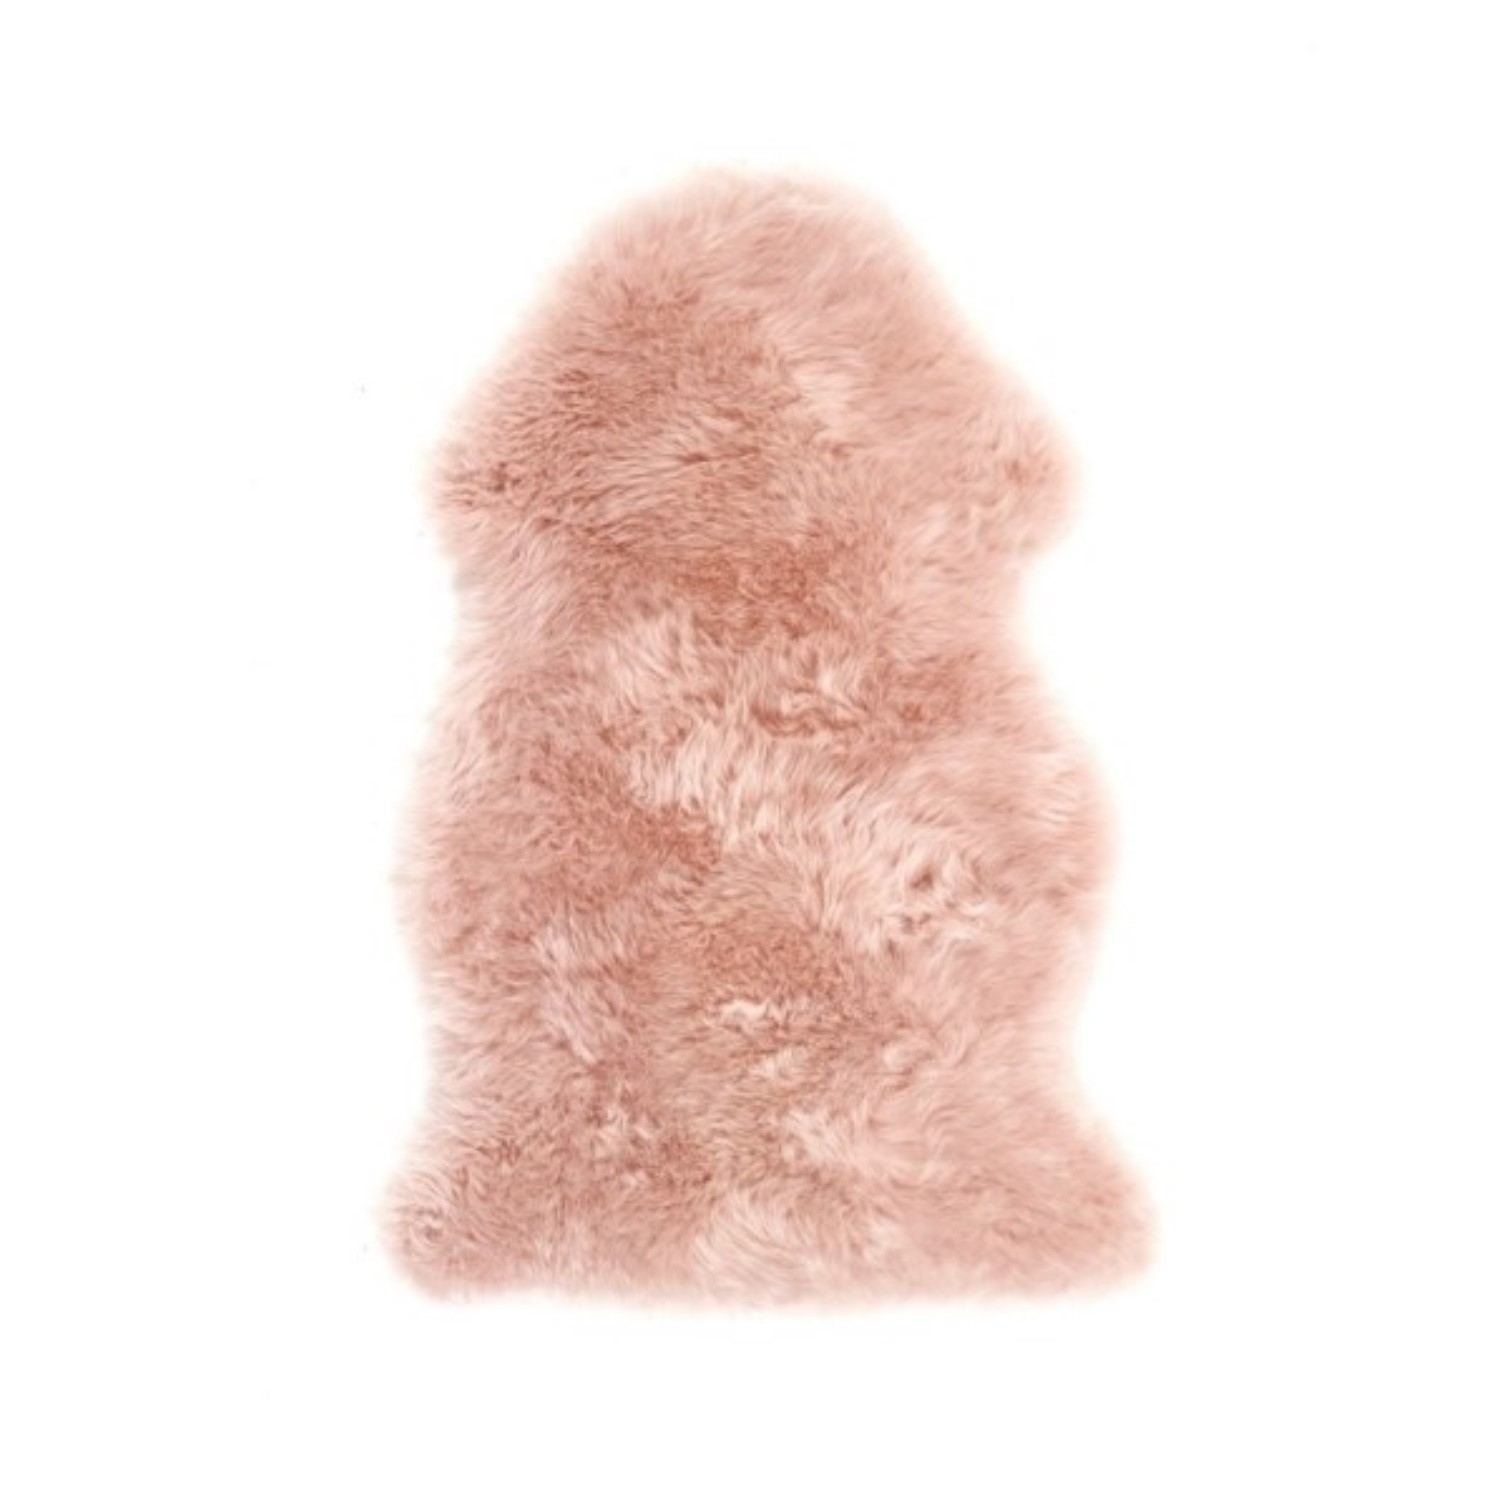 Photo of Ripley genuine sheepskin pink rug - single 95x65cm